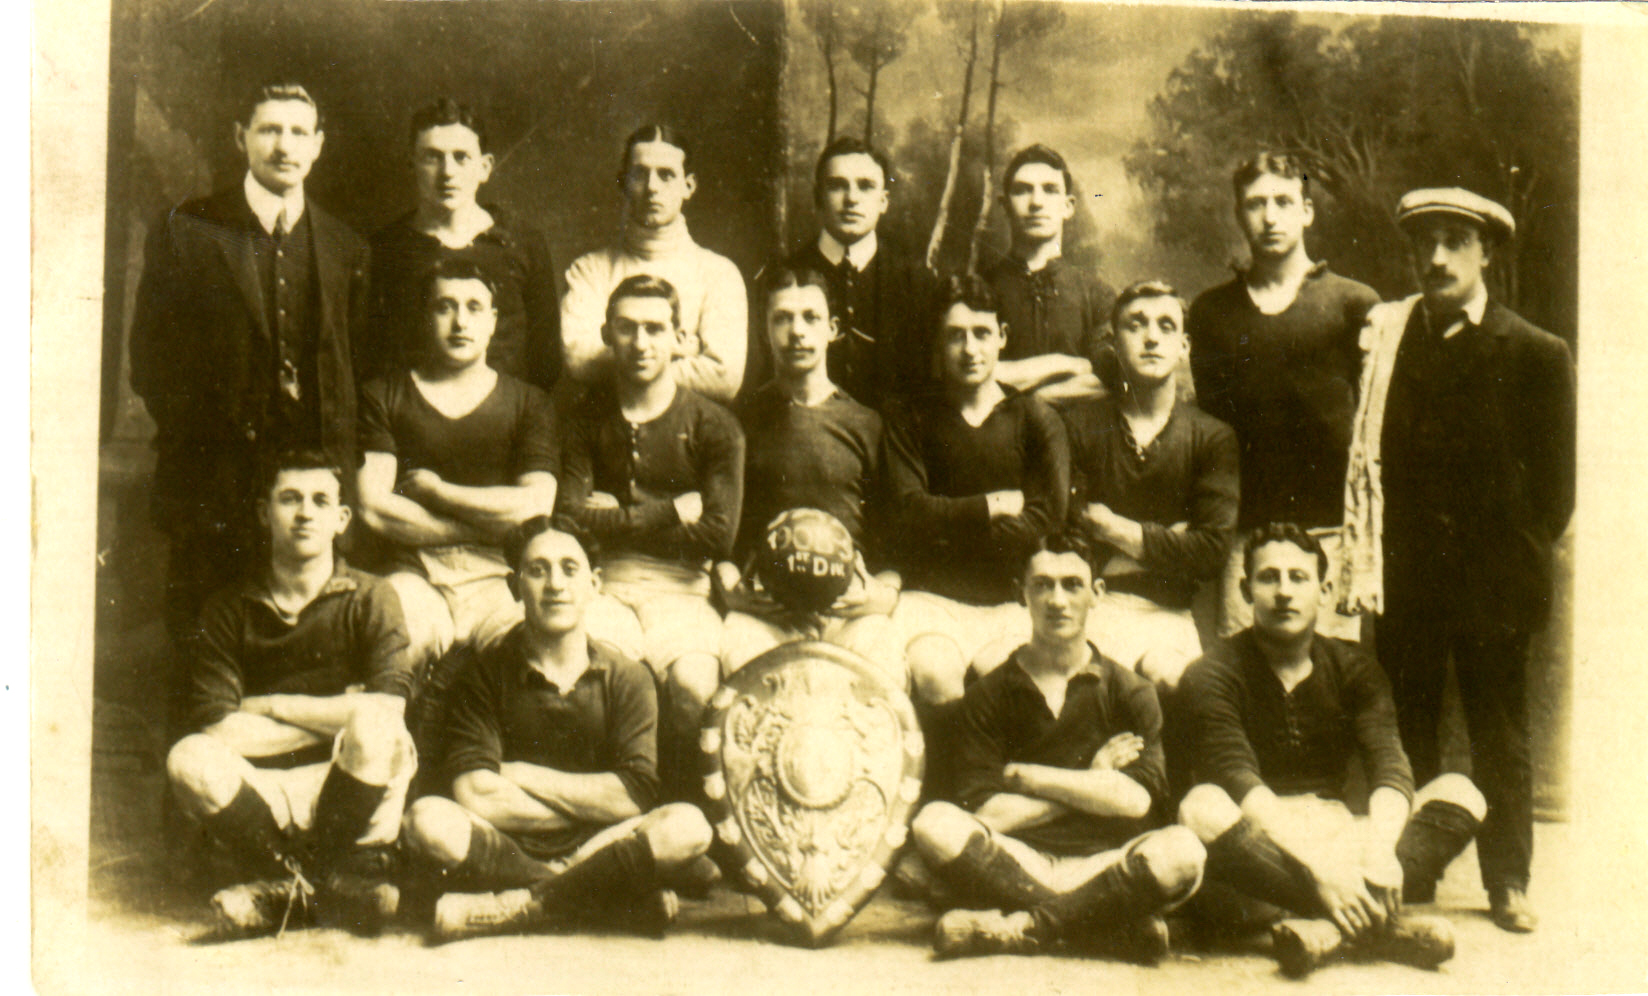 1909 Brady Club football team  - Hyman Lubel, 2nd from left, front row